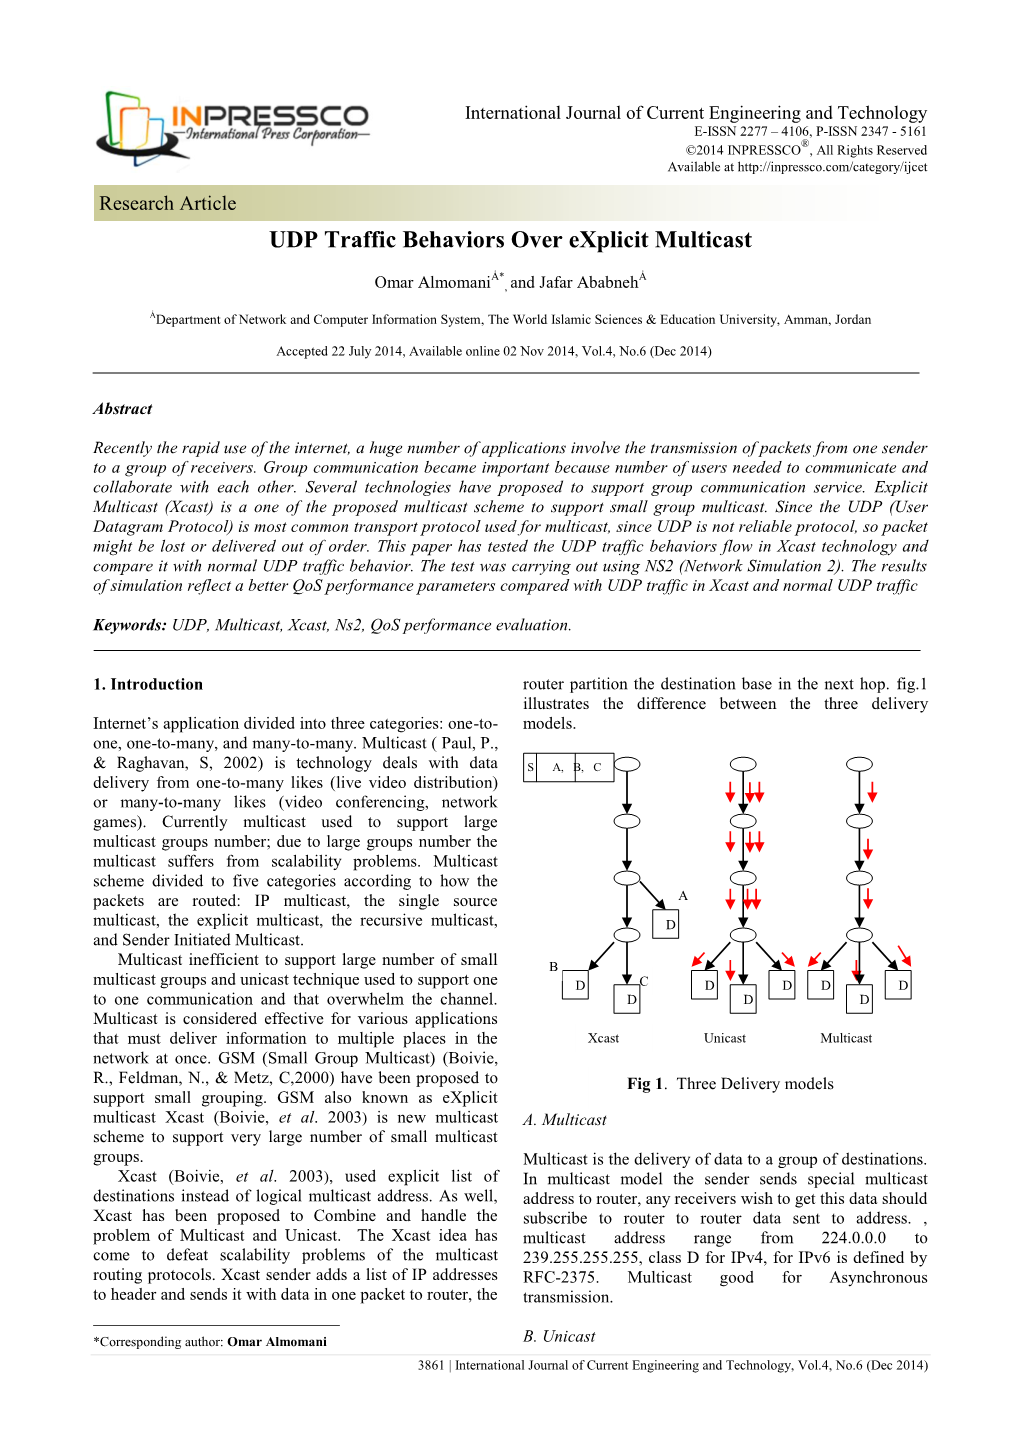 UDP Traffic Behaviors Over Explicit Multicast